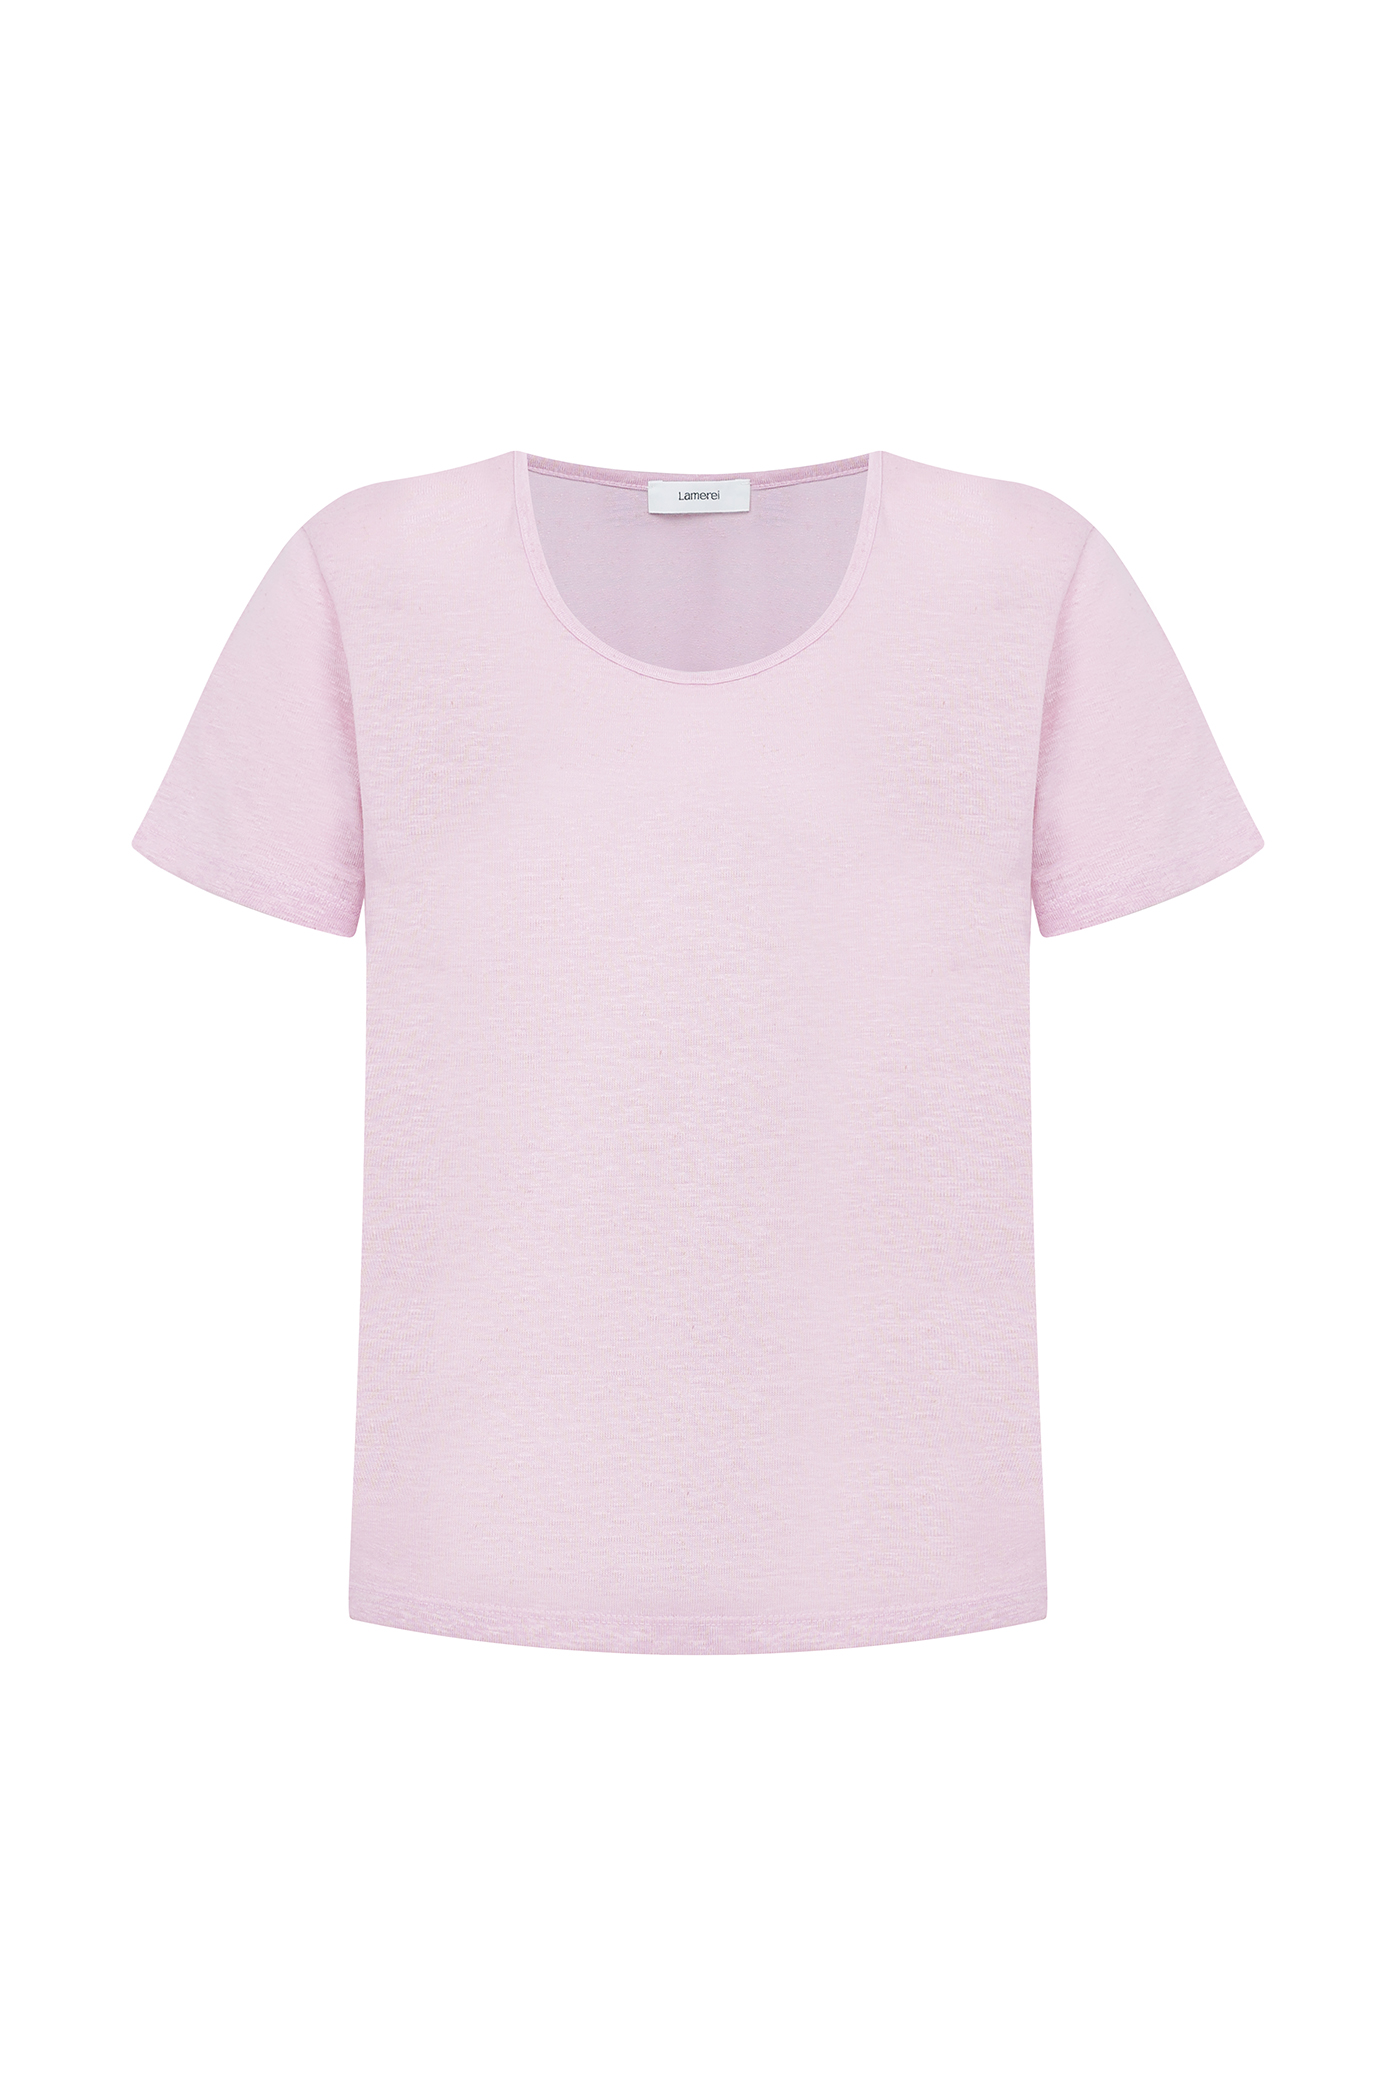 U Neck Linen T-shirts[LMBCSUTT615]-4color